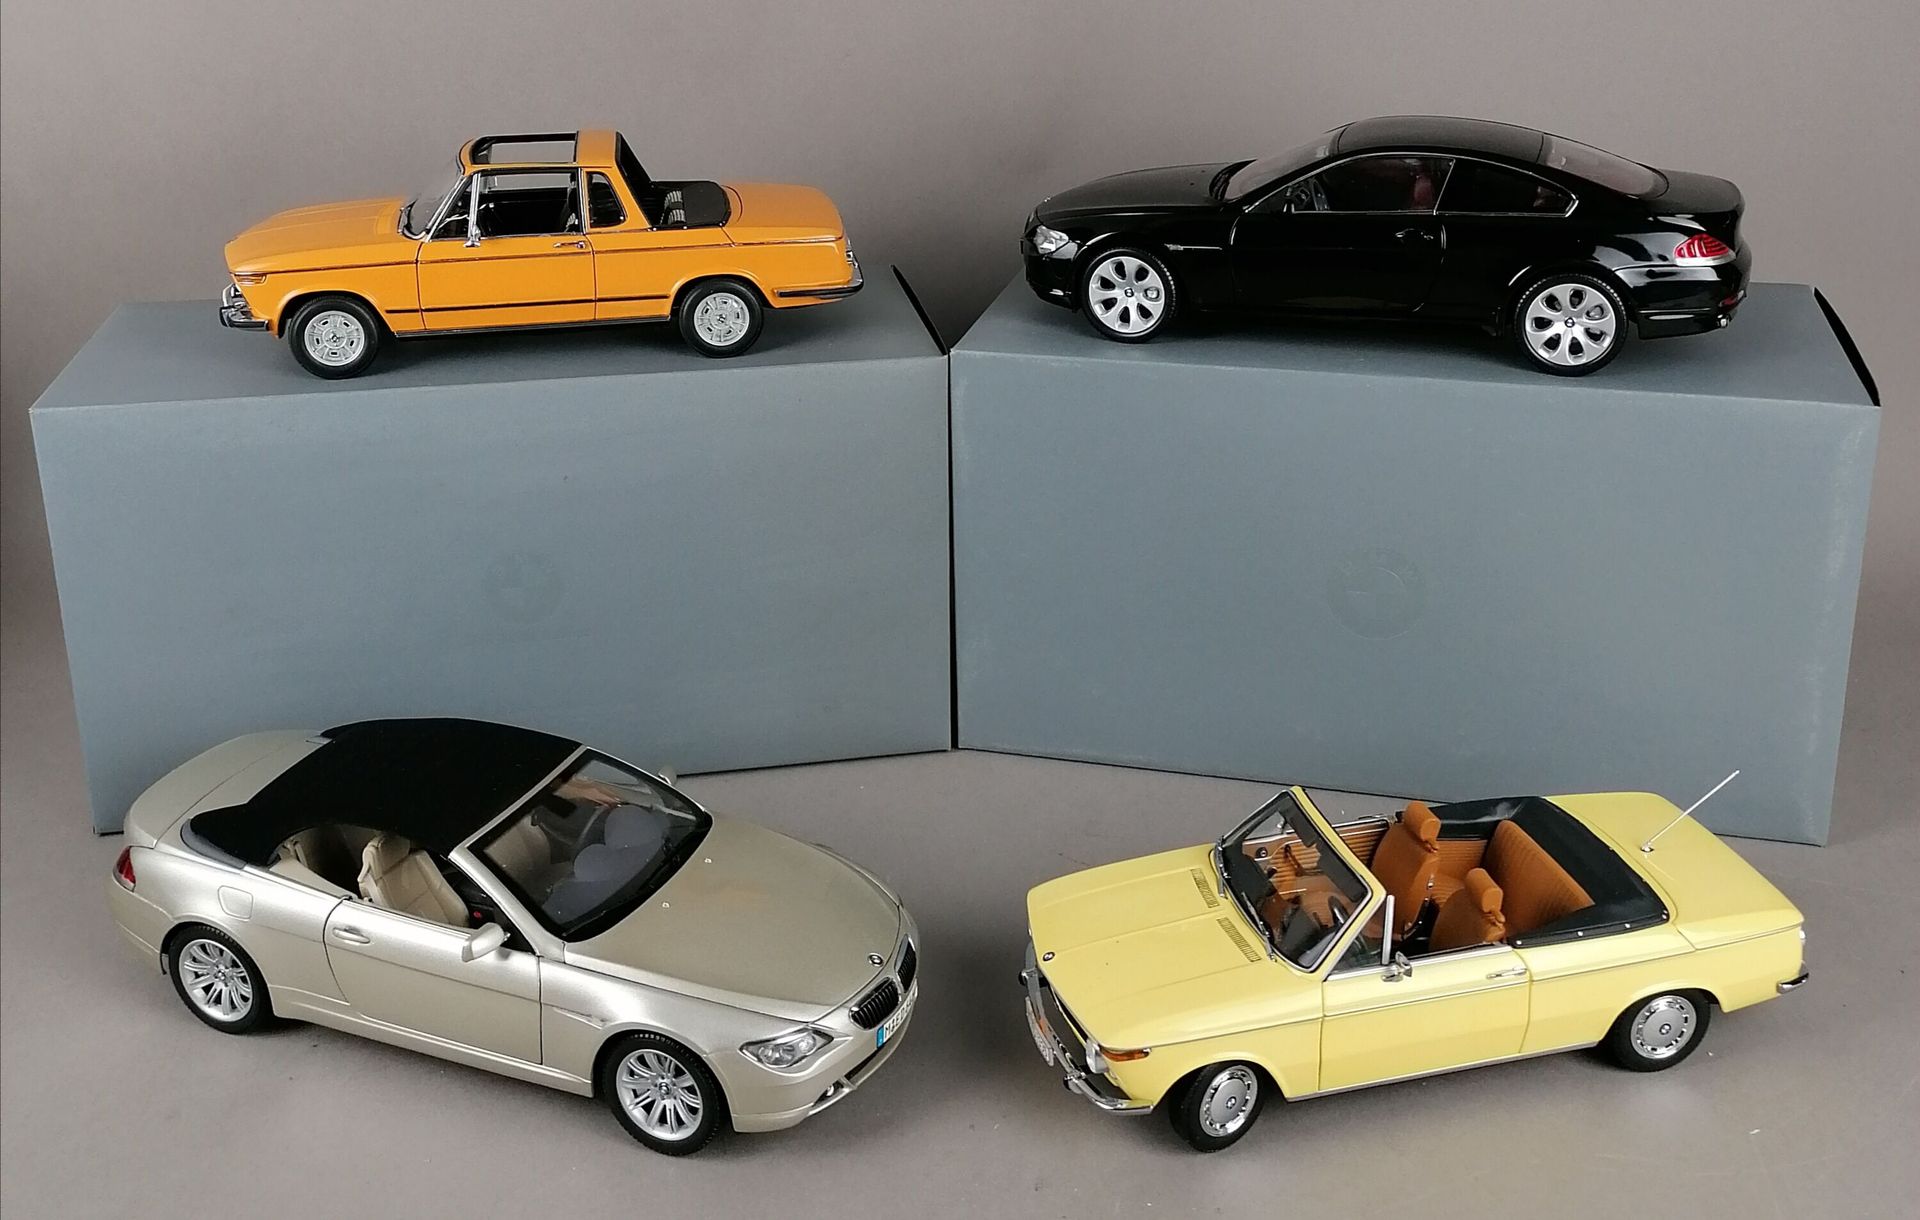 Null BMW - QUATRE BMW échelle 1/18 :

2x 2002 Cabrio/Convertible

1x 6er Cabrio &hellip;